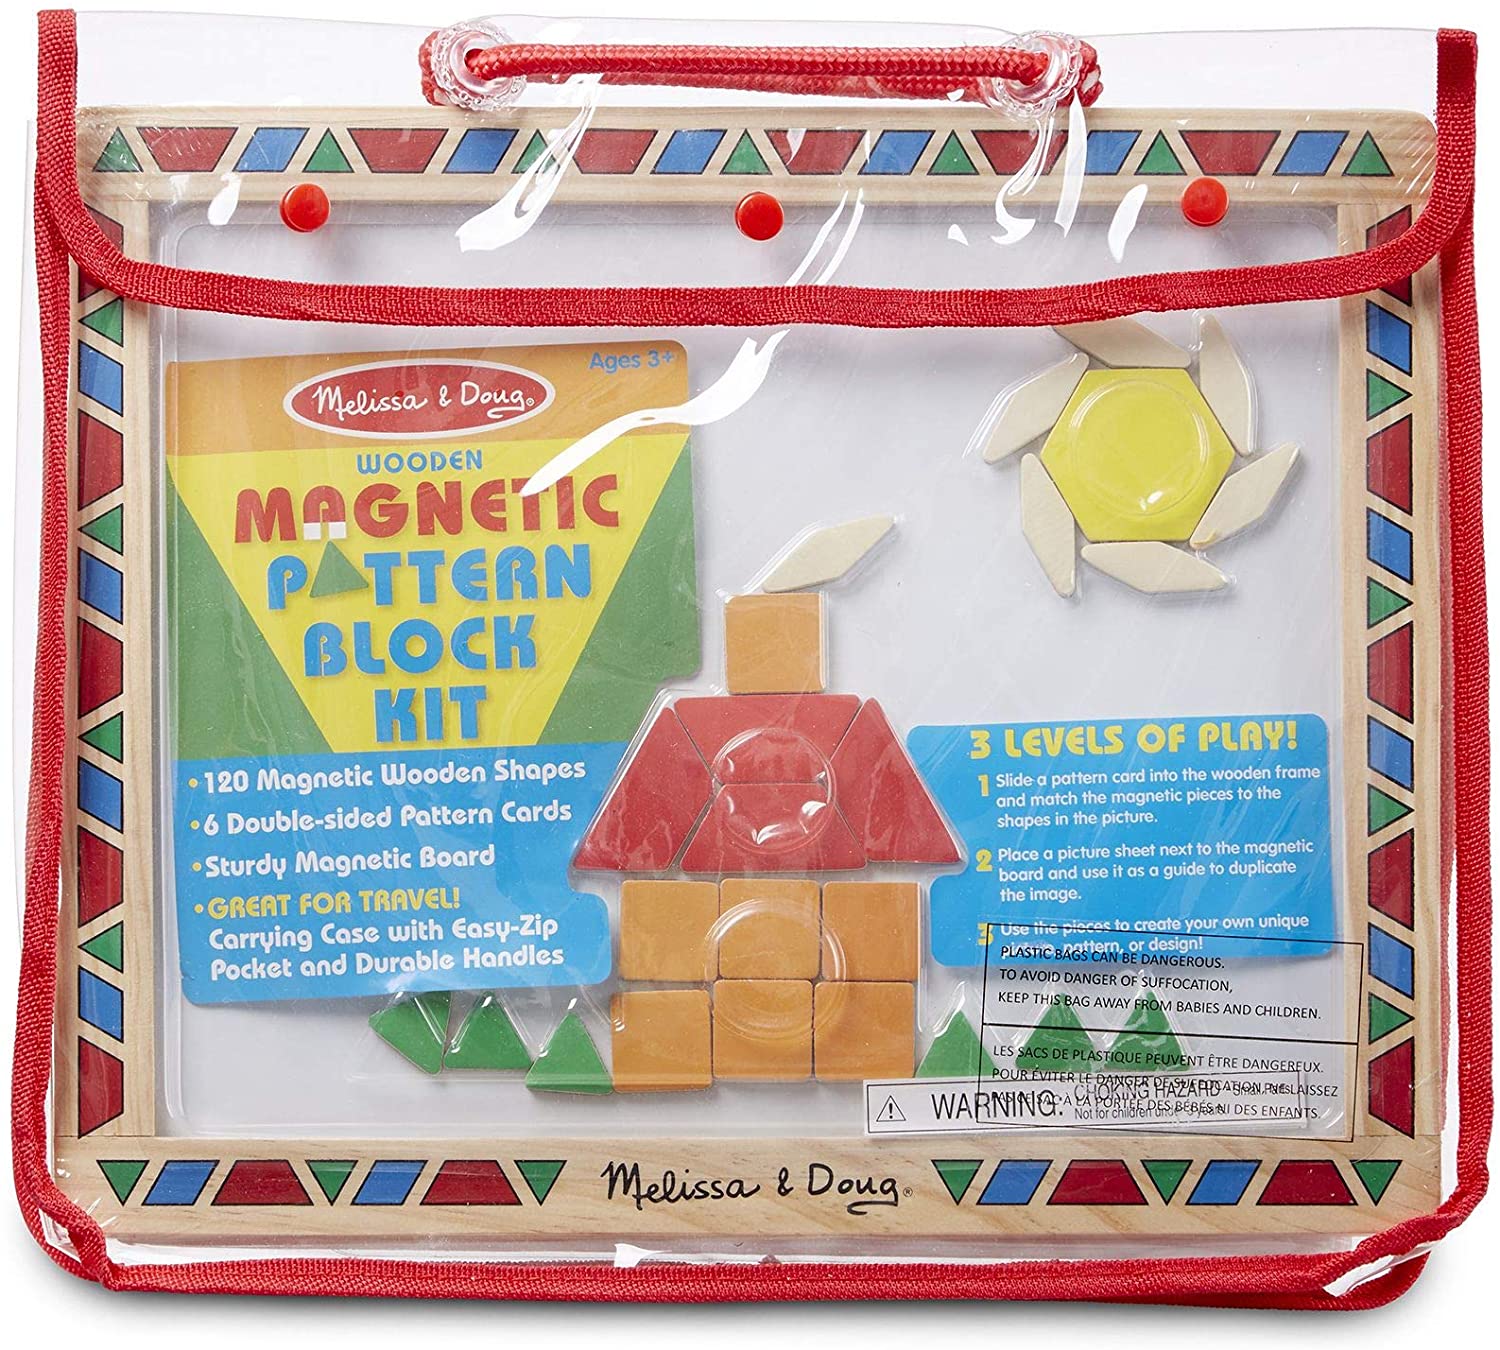 Magnetic Pattern Block Kit